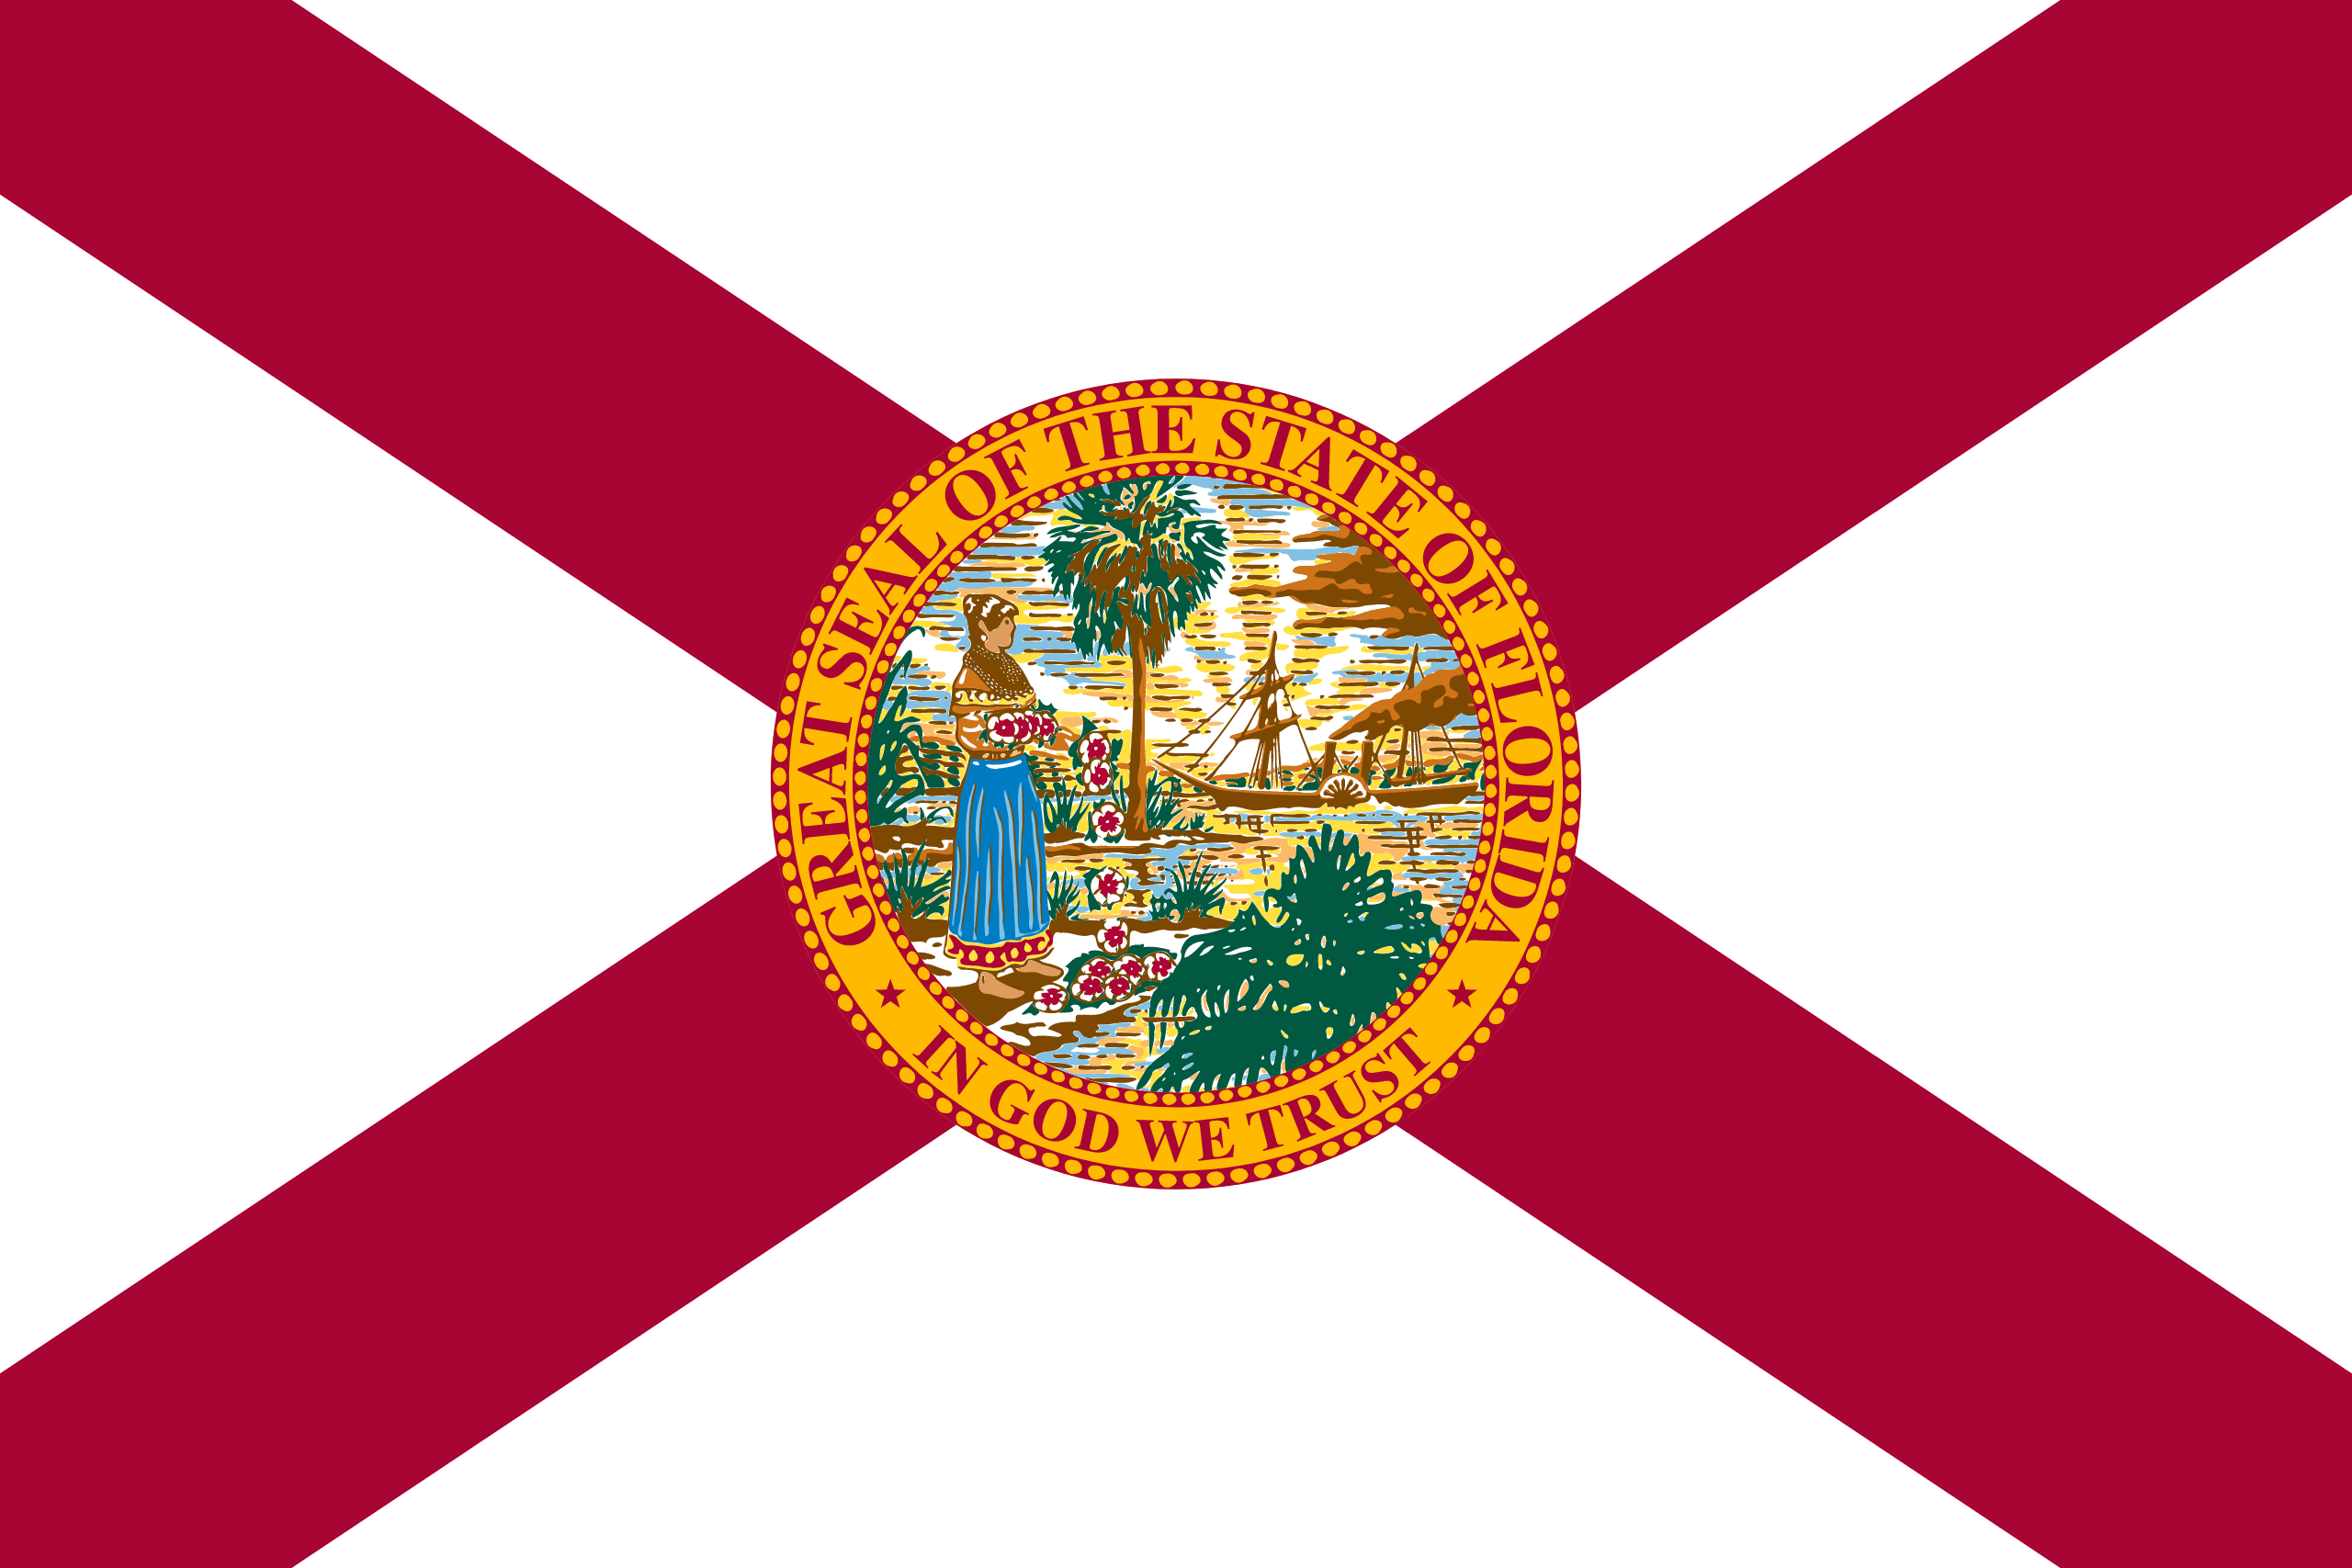 Florida License Plate Lookup